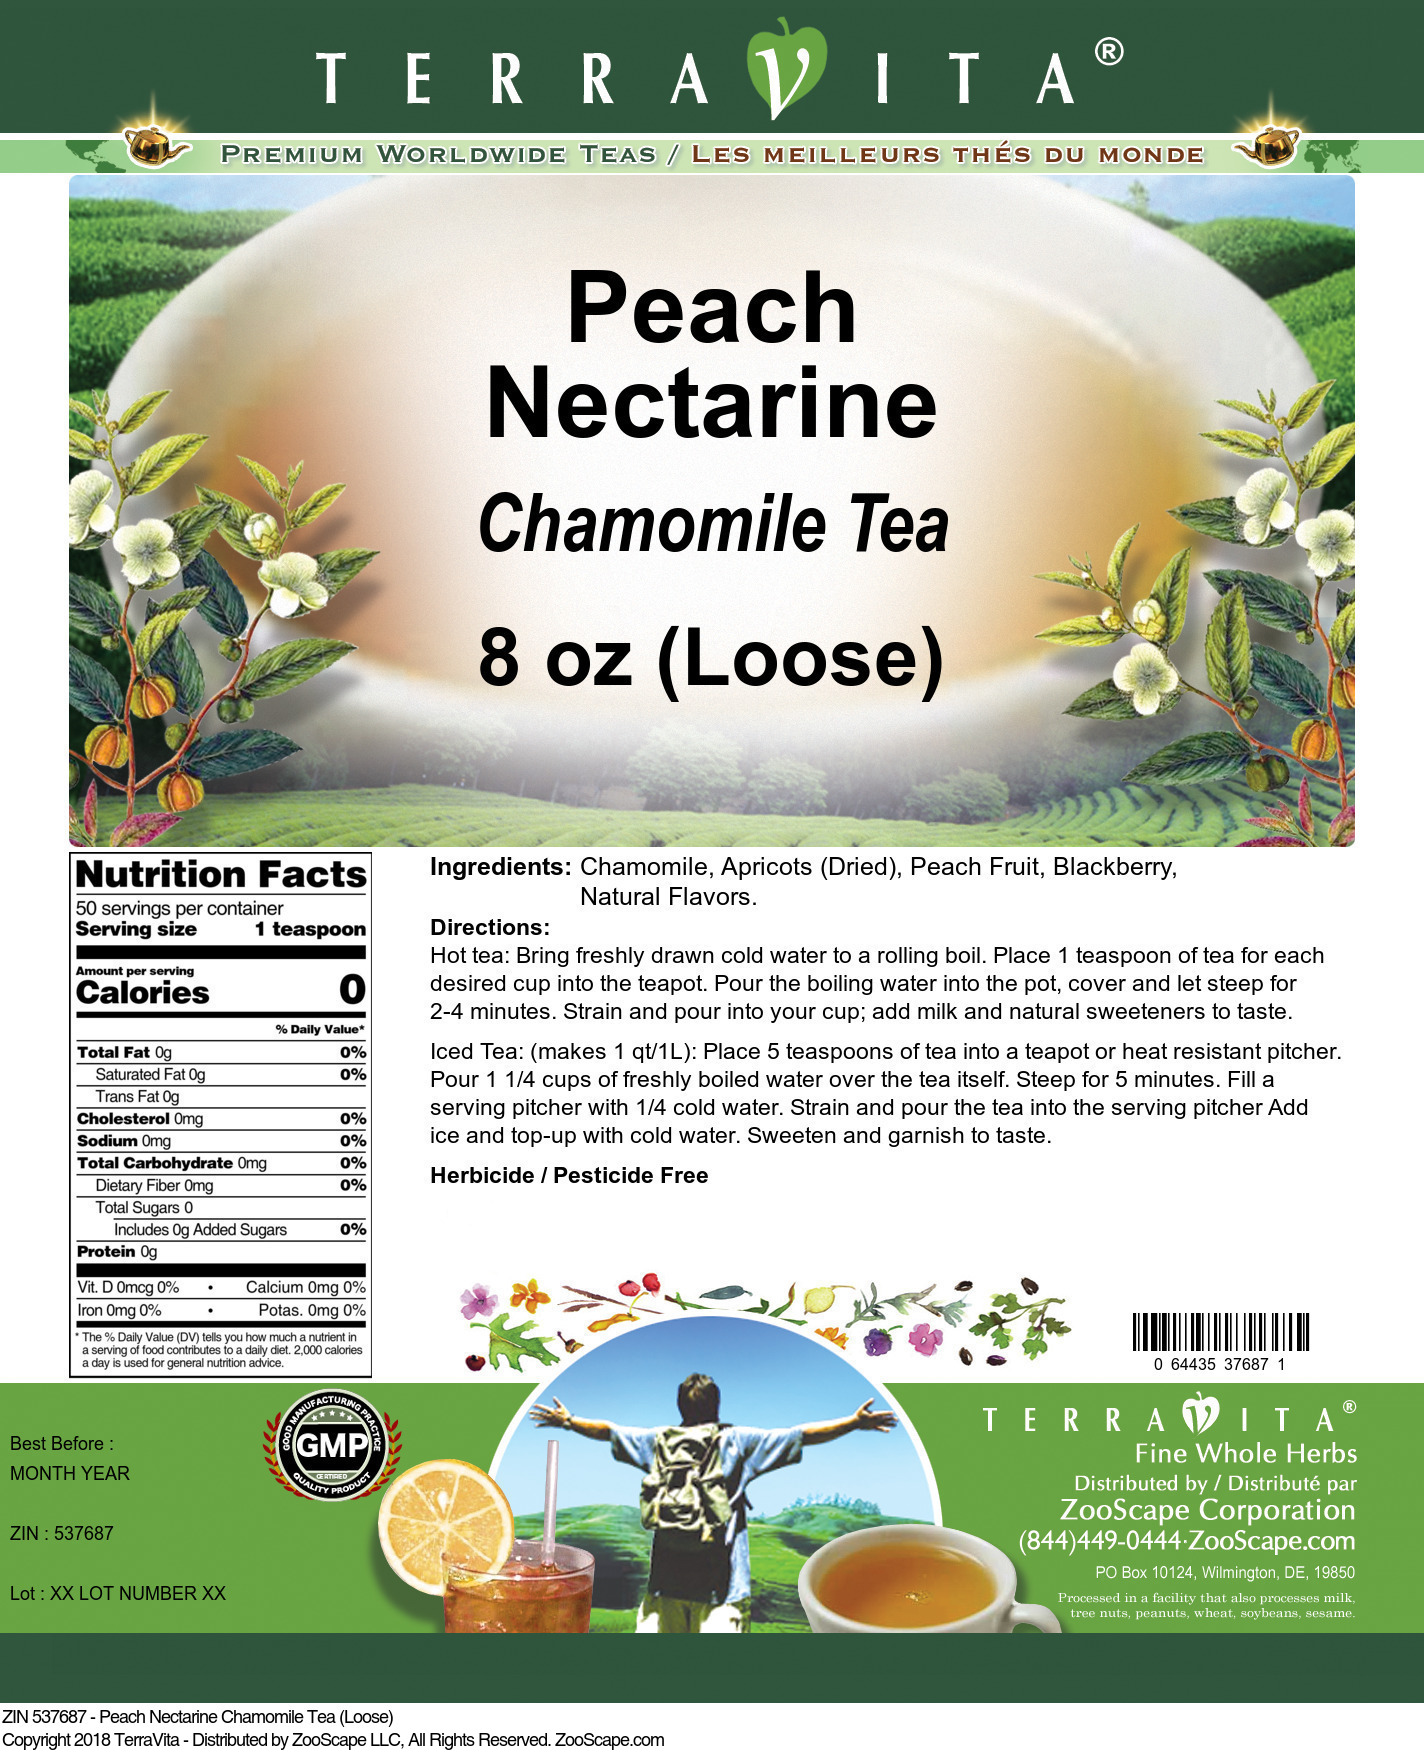 Peach Nectarine Chamomile Tea (Loose) - Label